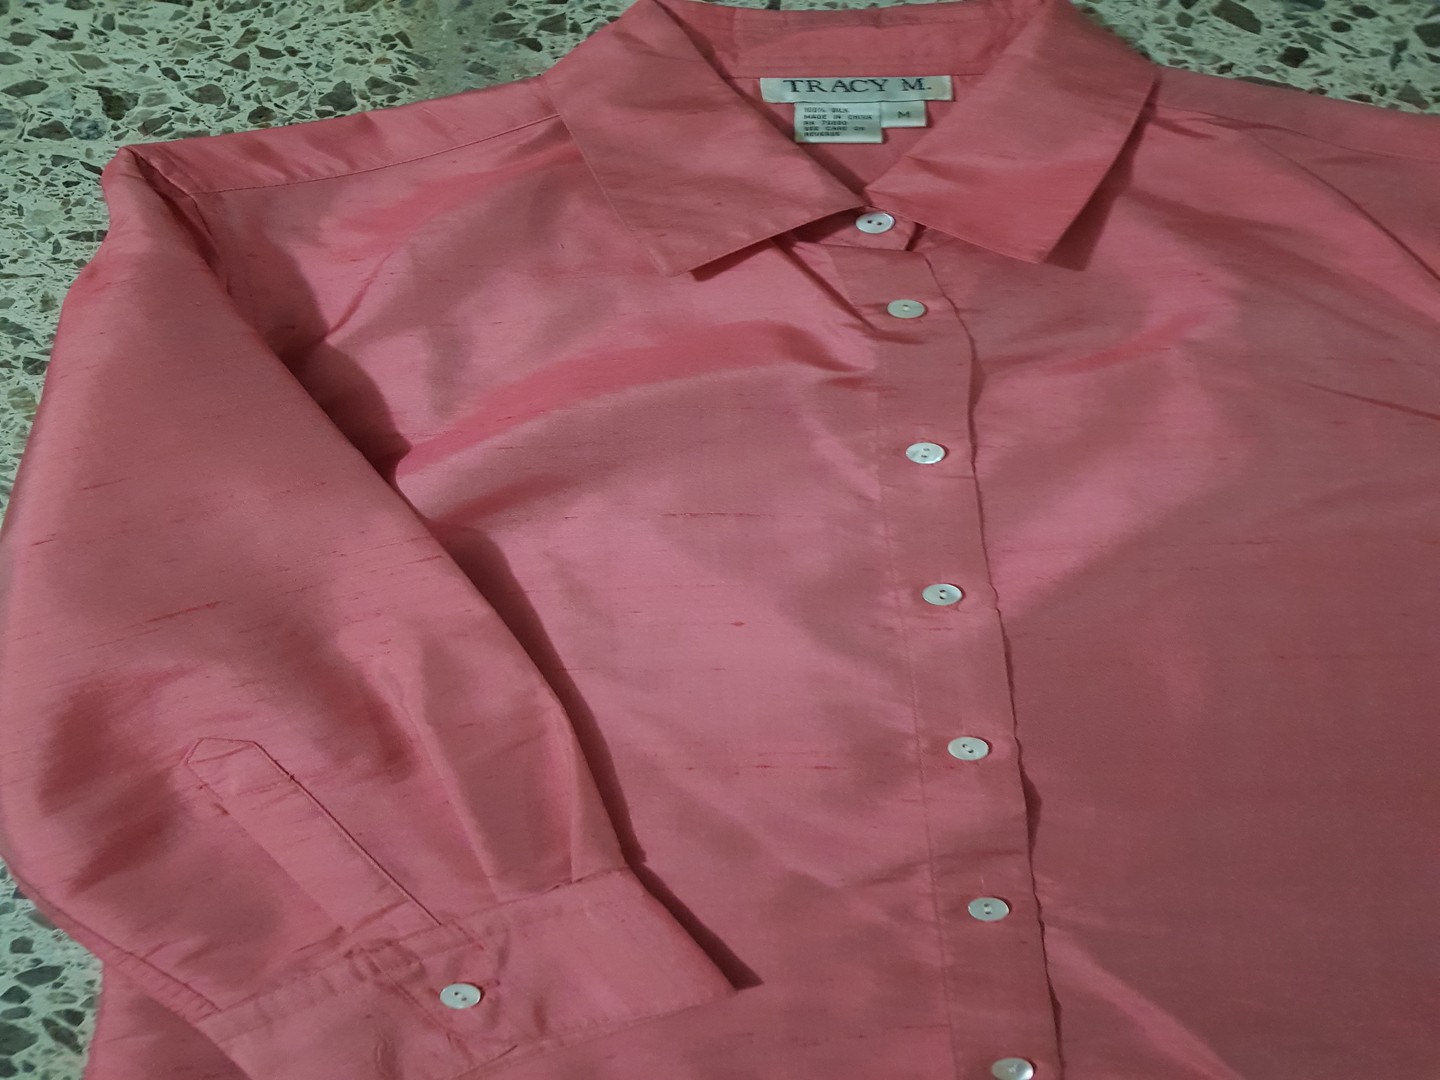 Elegante blusa camisera de seda pura, tamaño M, marca Tracy M. 0